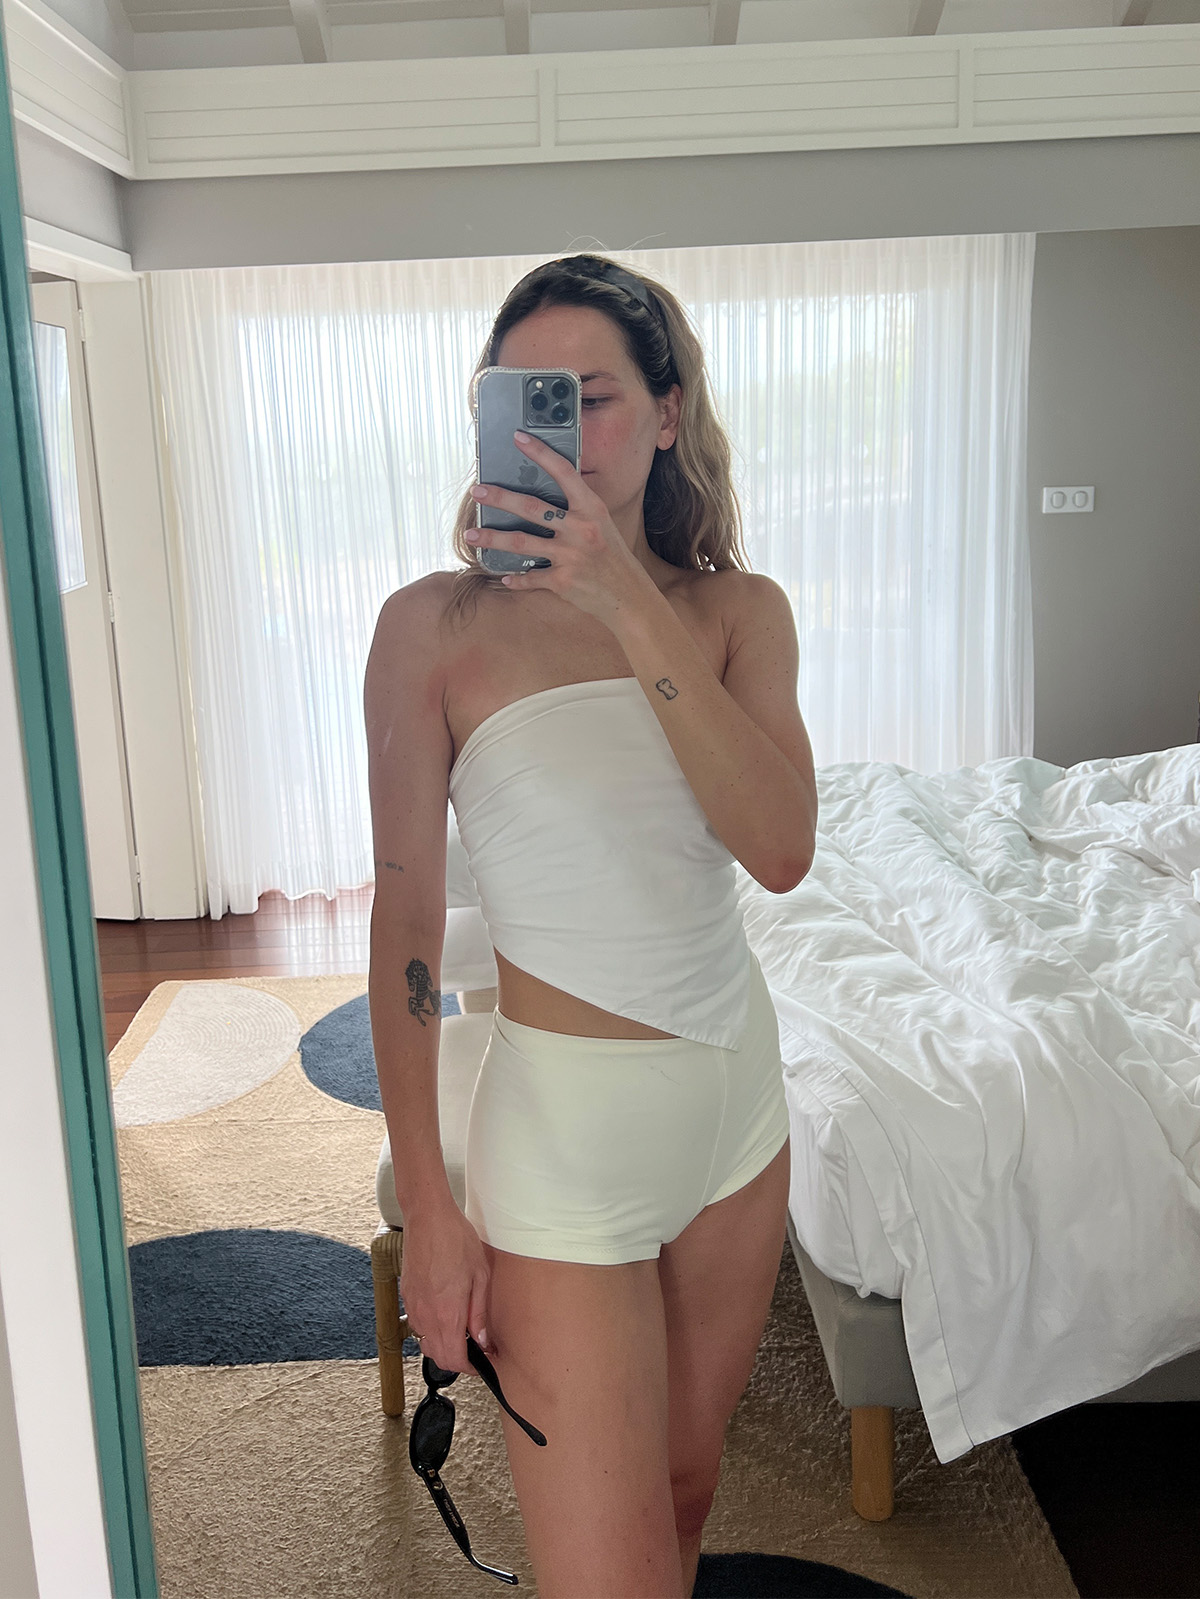 Eliza Huber wearing a Tibi bandana top with swim shorts.